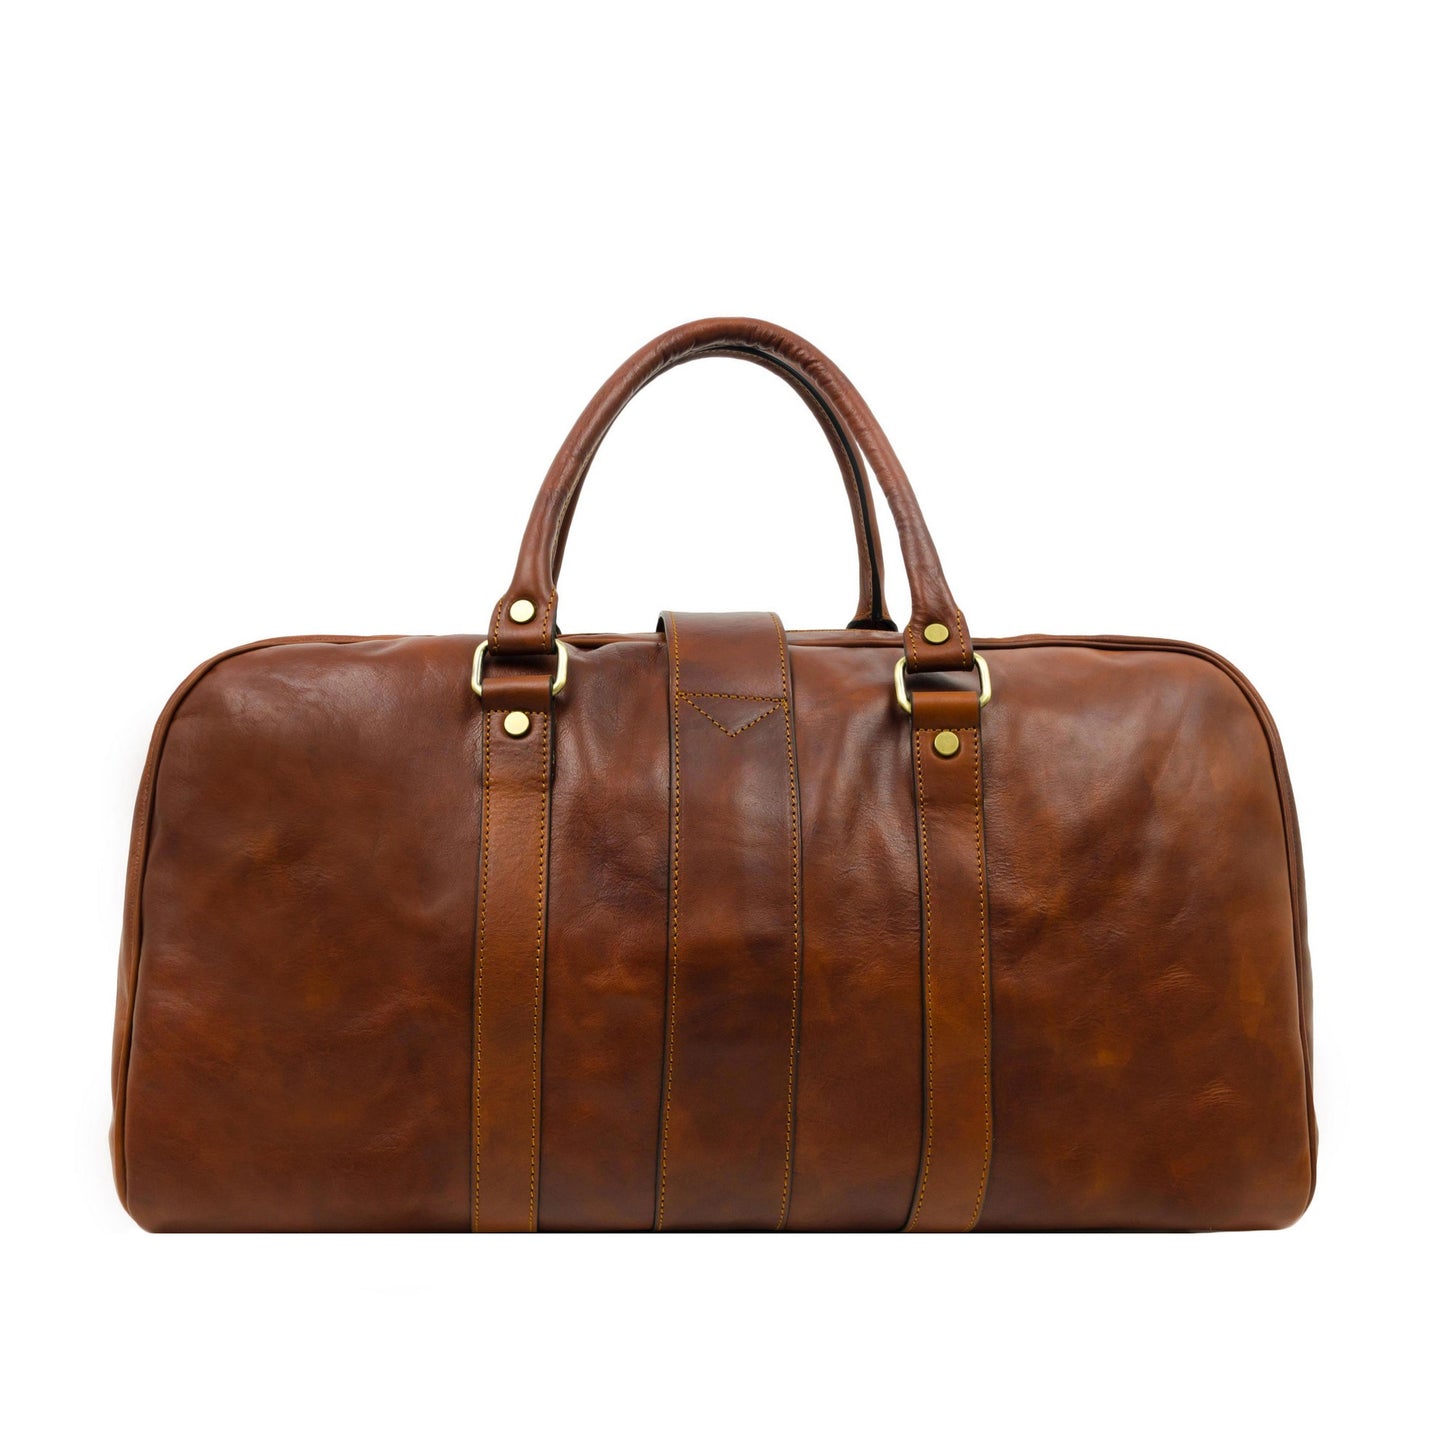 Cognac Brown Matte Leather Duffel Bag - Tender Is the Night